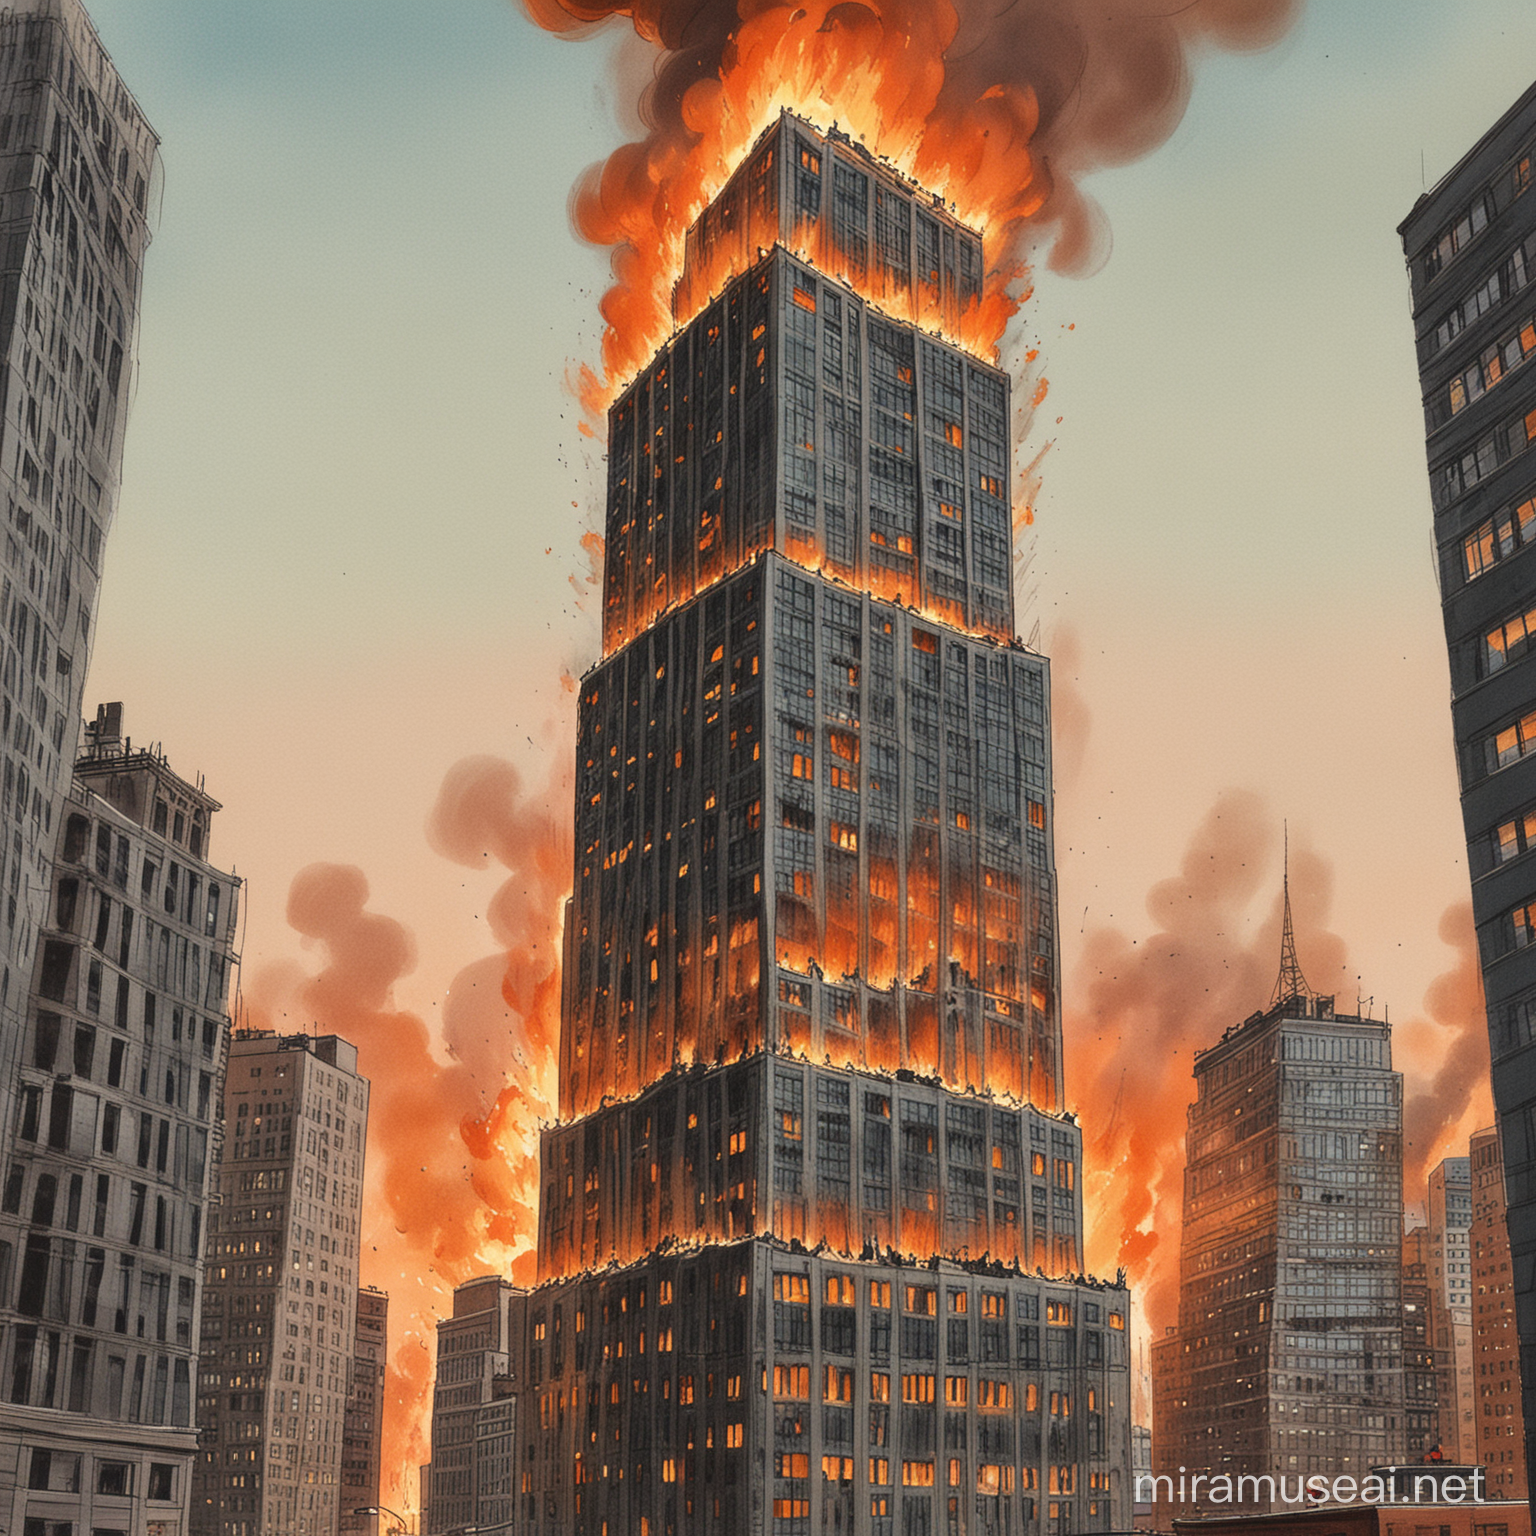 Urban Skyscraper Blaze Cartoon Illustration of Highrise Building Engulfed in Flames